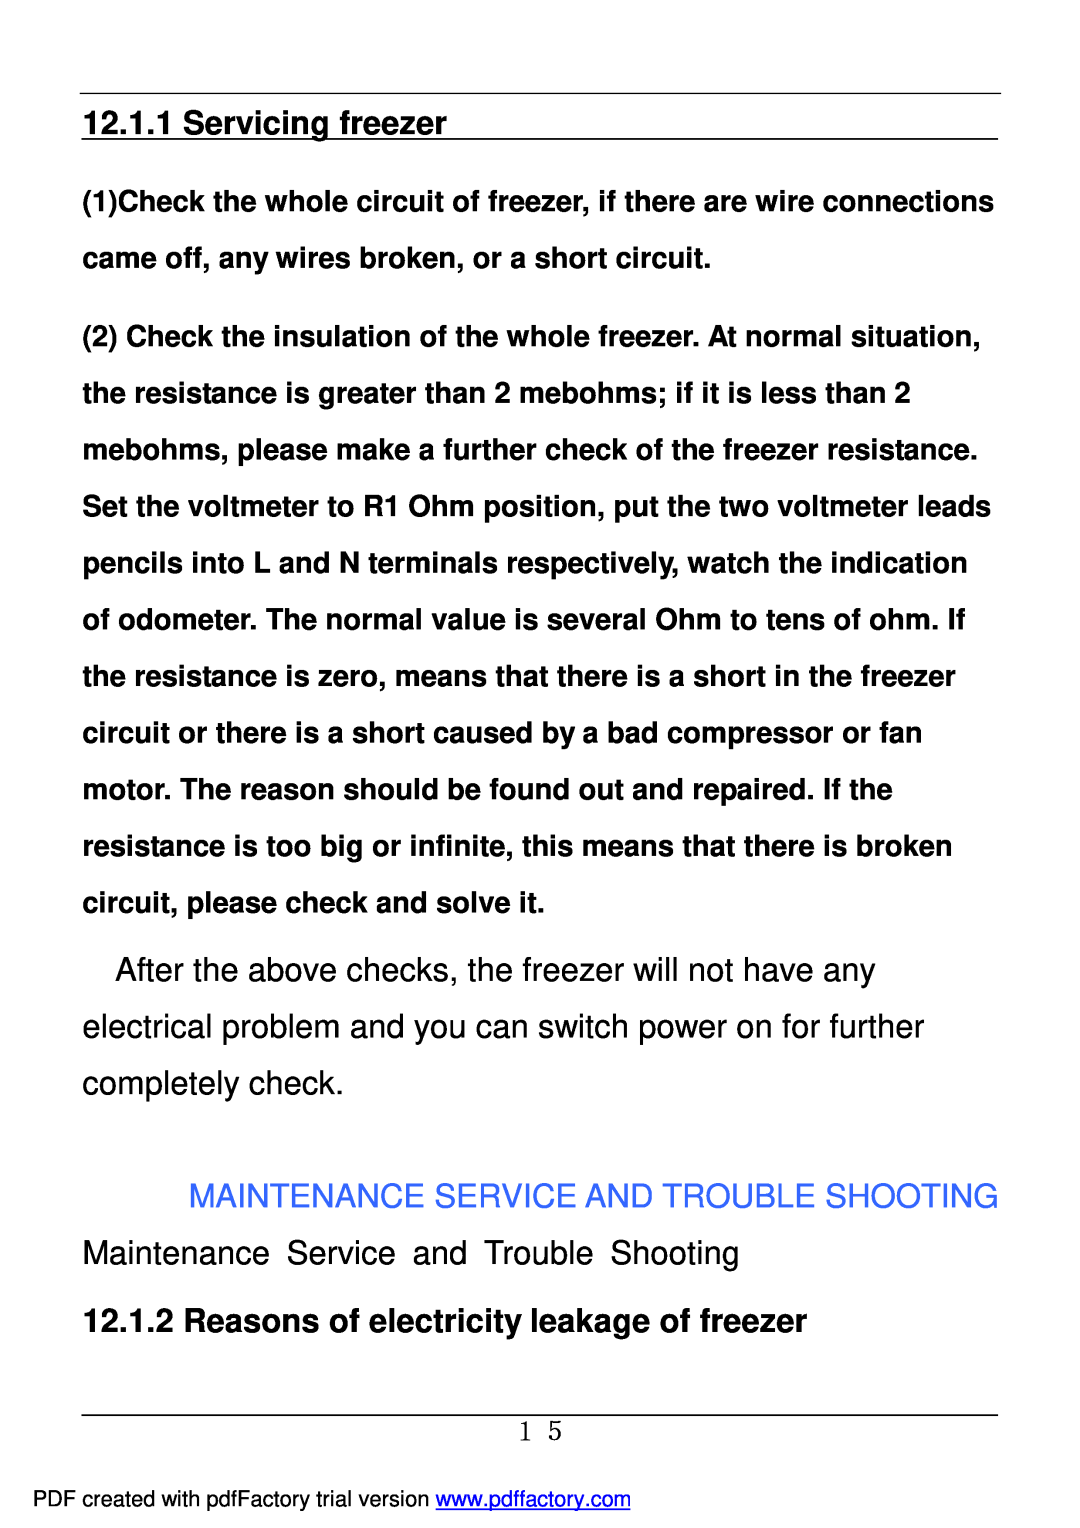 Haier BD-478A Servicing freezer, Maintenance Service And Trouble Shooting, Maintenance Service and Trouble Shooting 